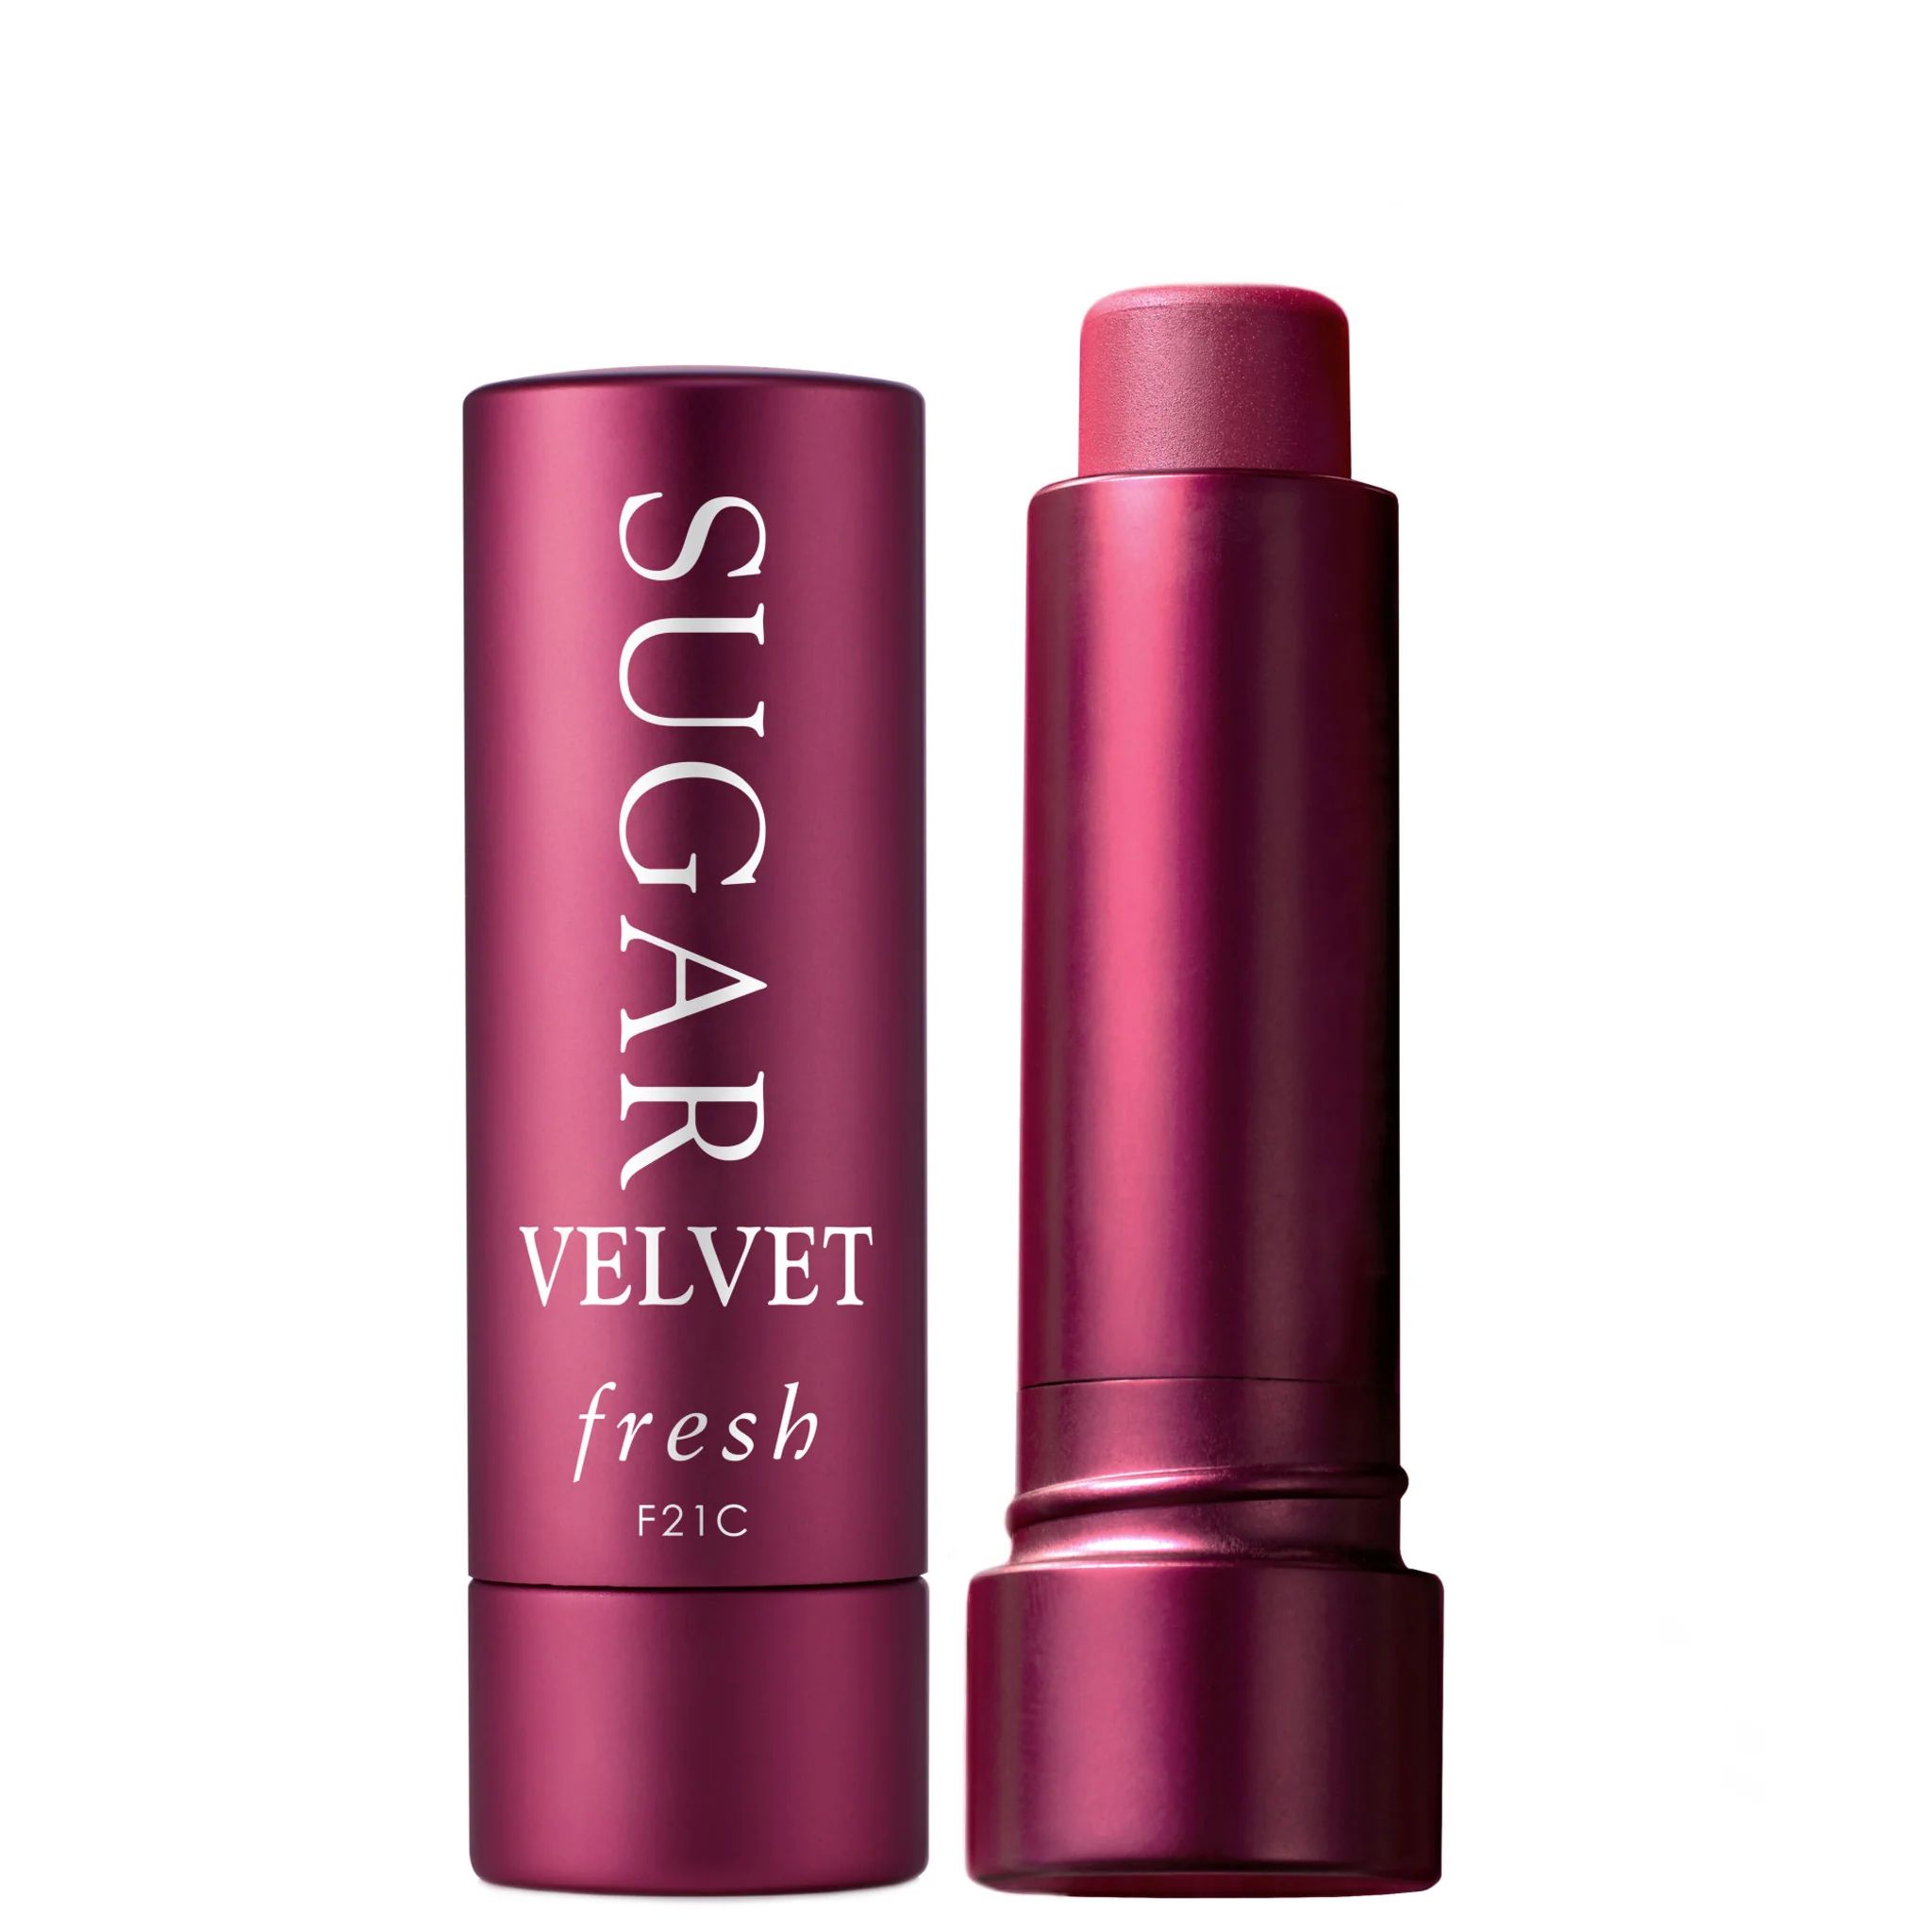 Sugar Velvet Tinted Lip Treatment Sunscreen SPF 15 | Bluemercury, Inc.